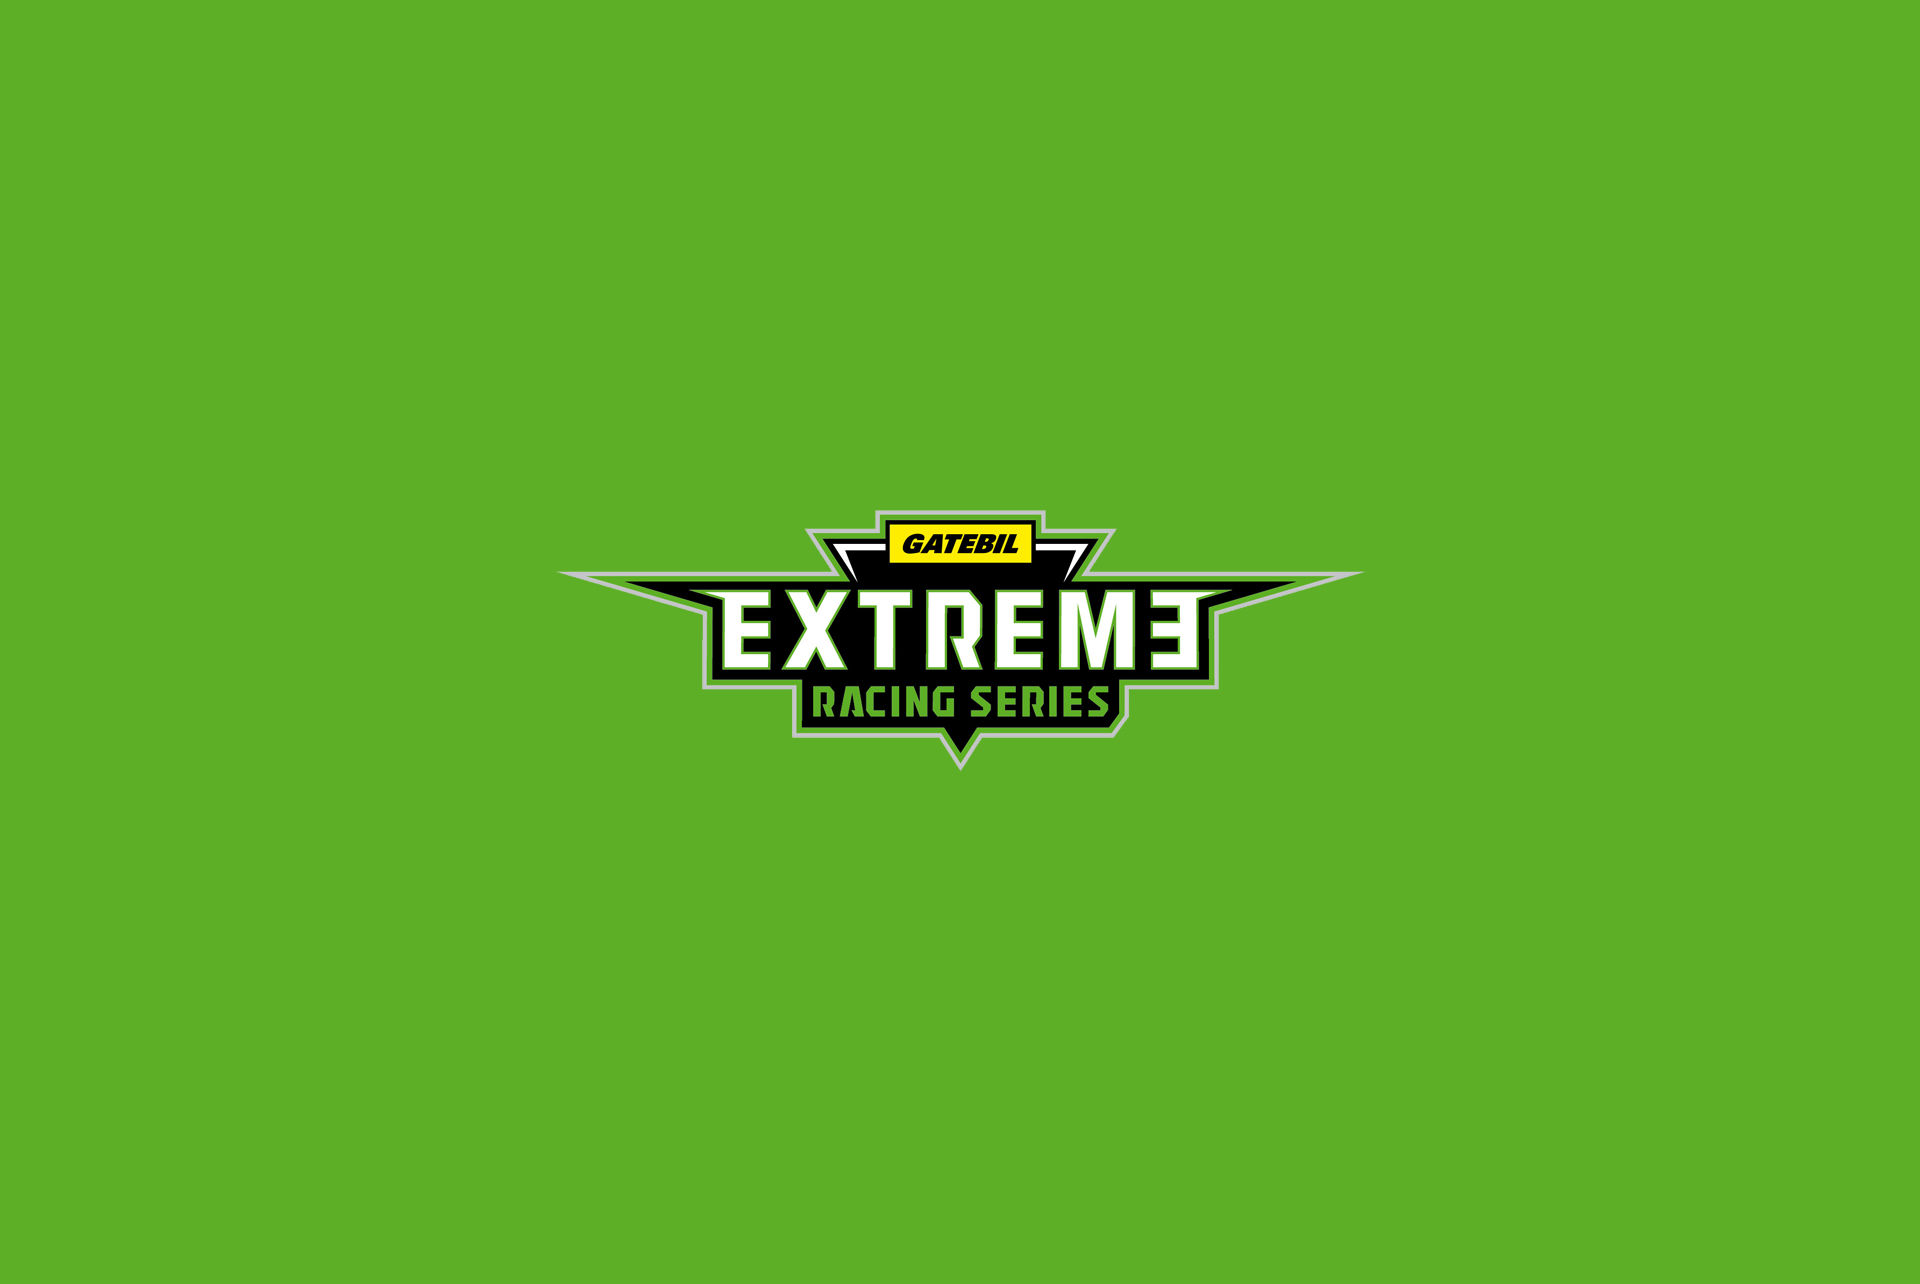 Logo Gatebil Extreme Racing Series 